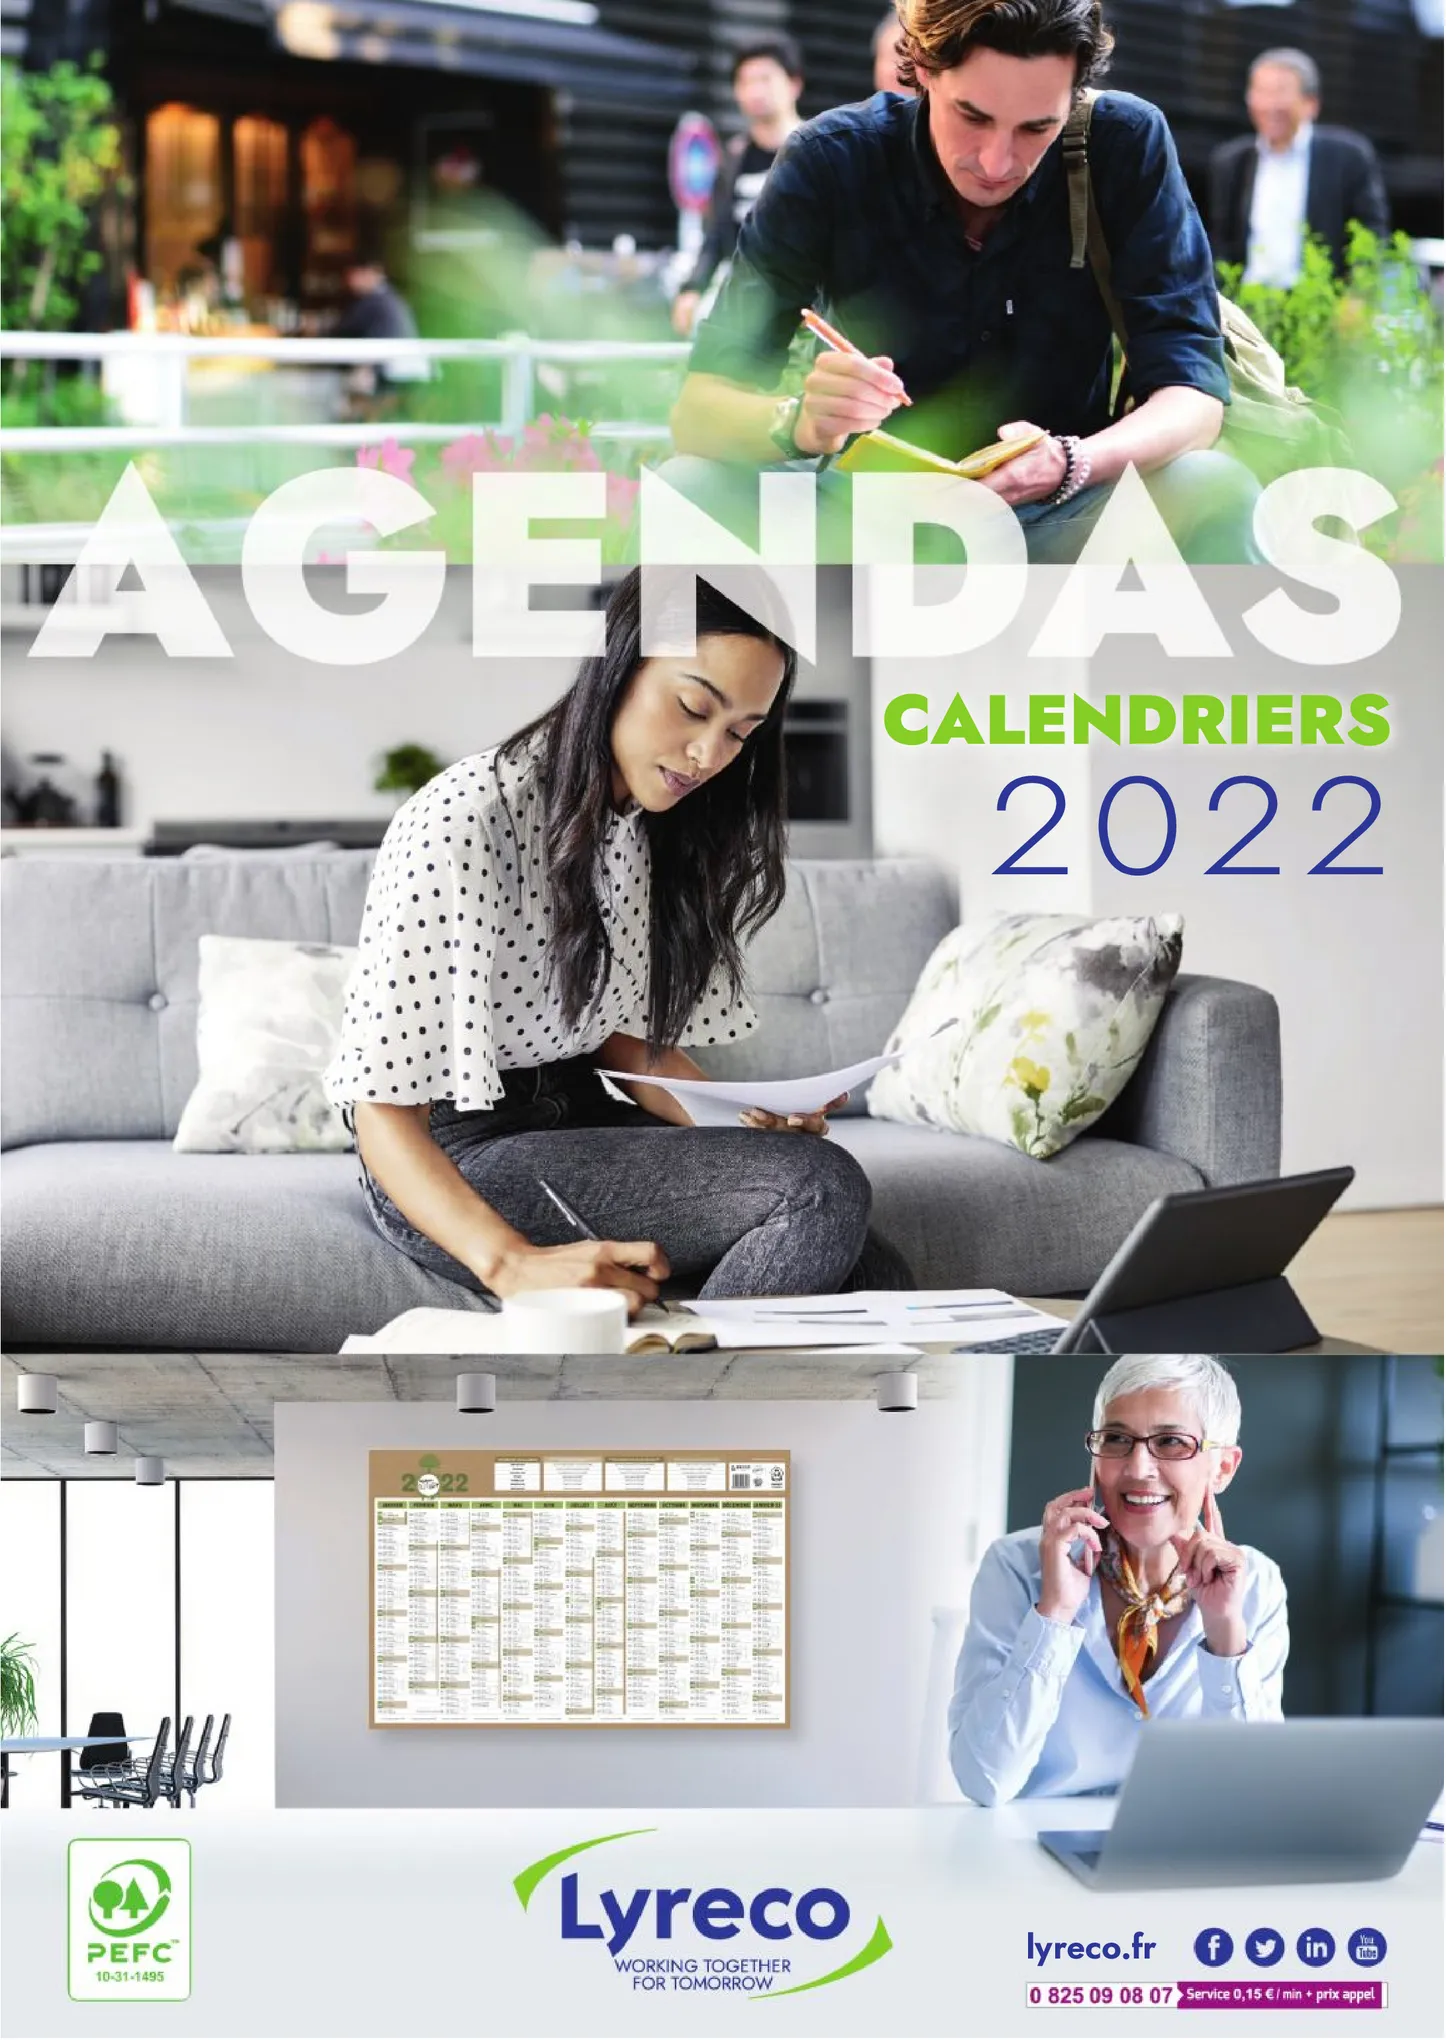 Catalogue Catalogue Agendas & Calendries 2022, page 00001